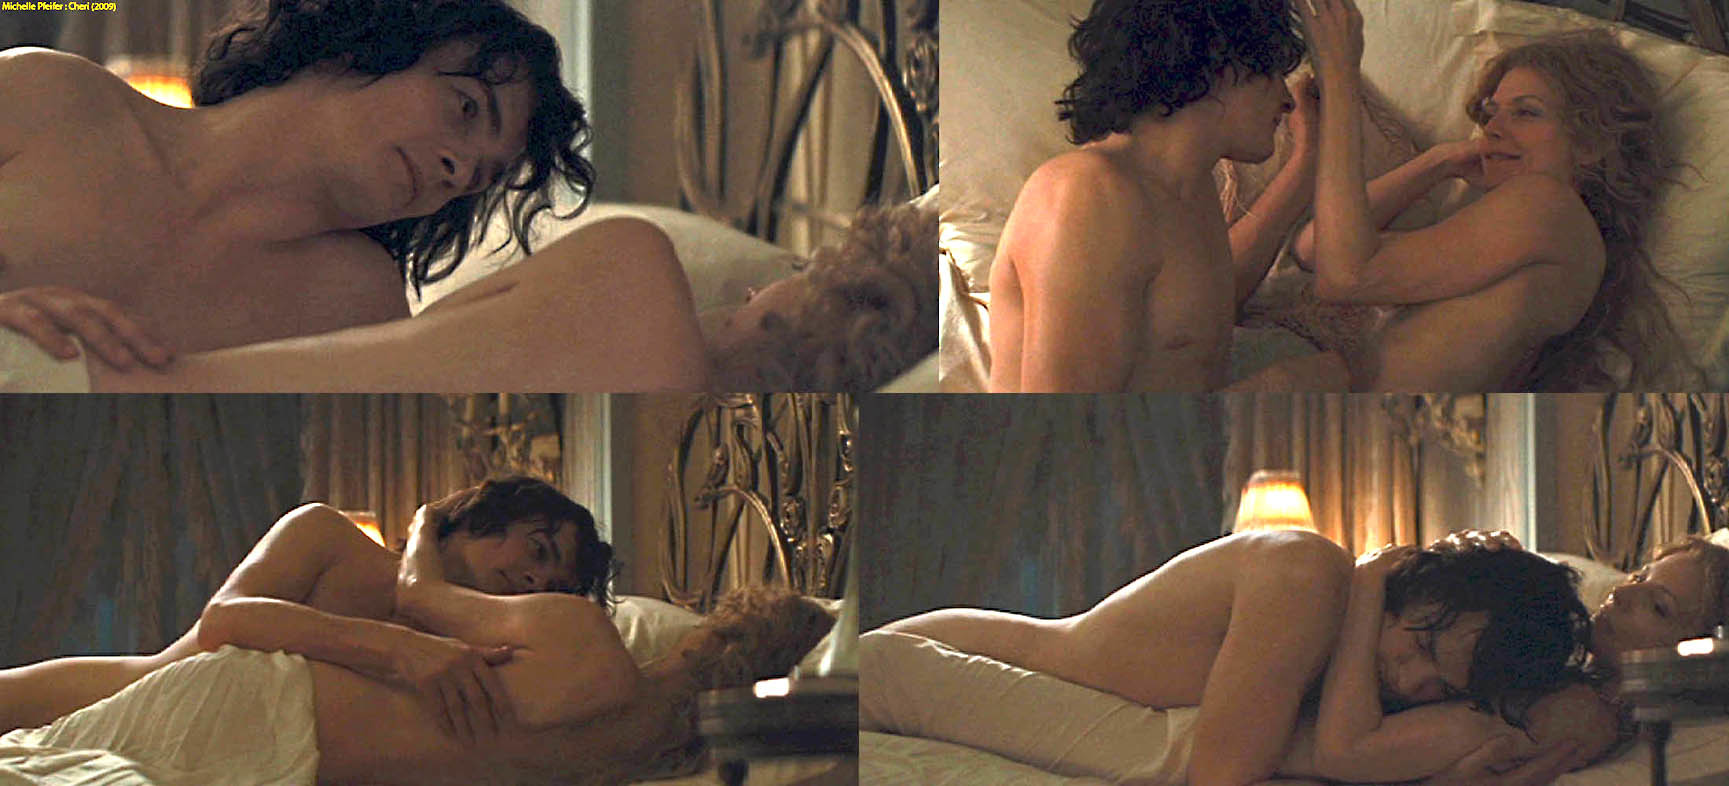 Nude pics of michelle pfeiffer - 🧡 Michelle pfeiffer ever been nude ✔ Nudi...